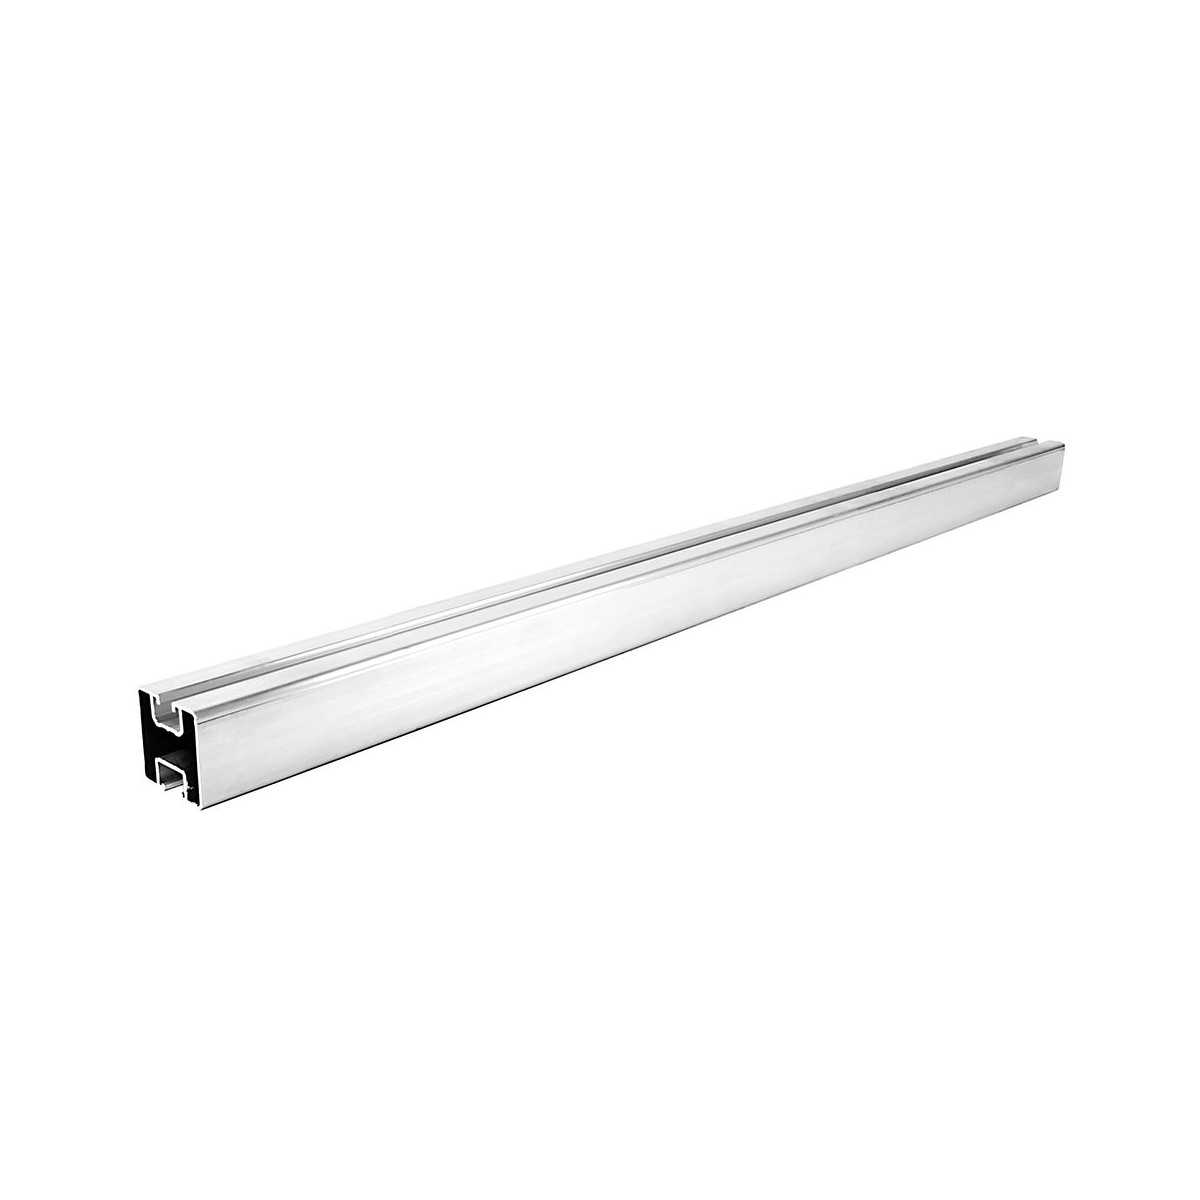 Aluminum bar 4x4x320 cm for mounting panels